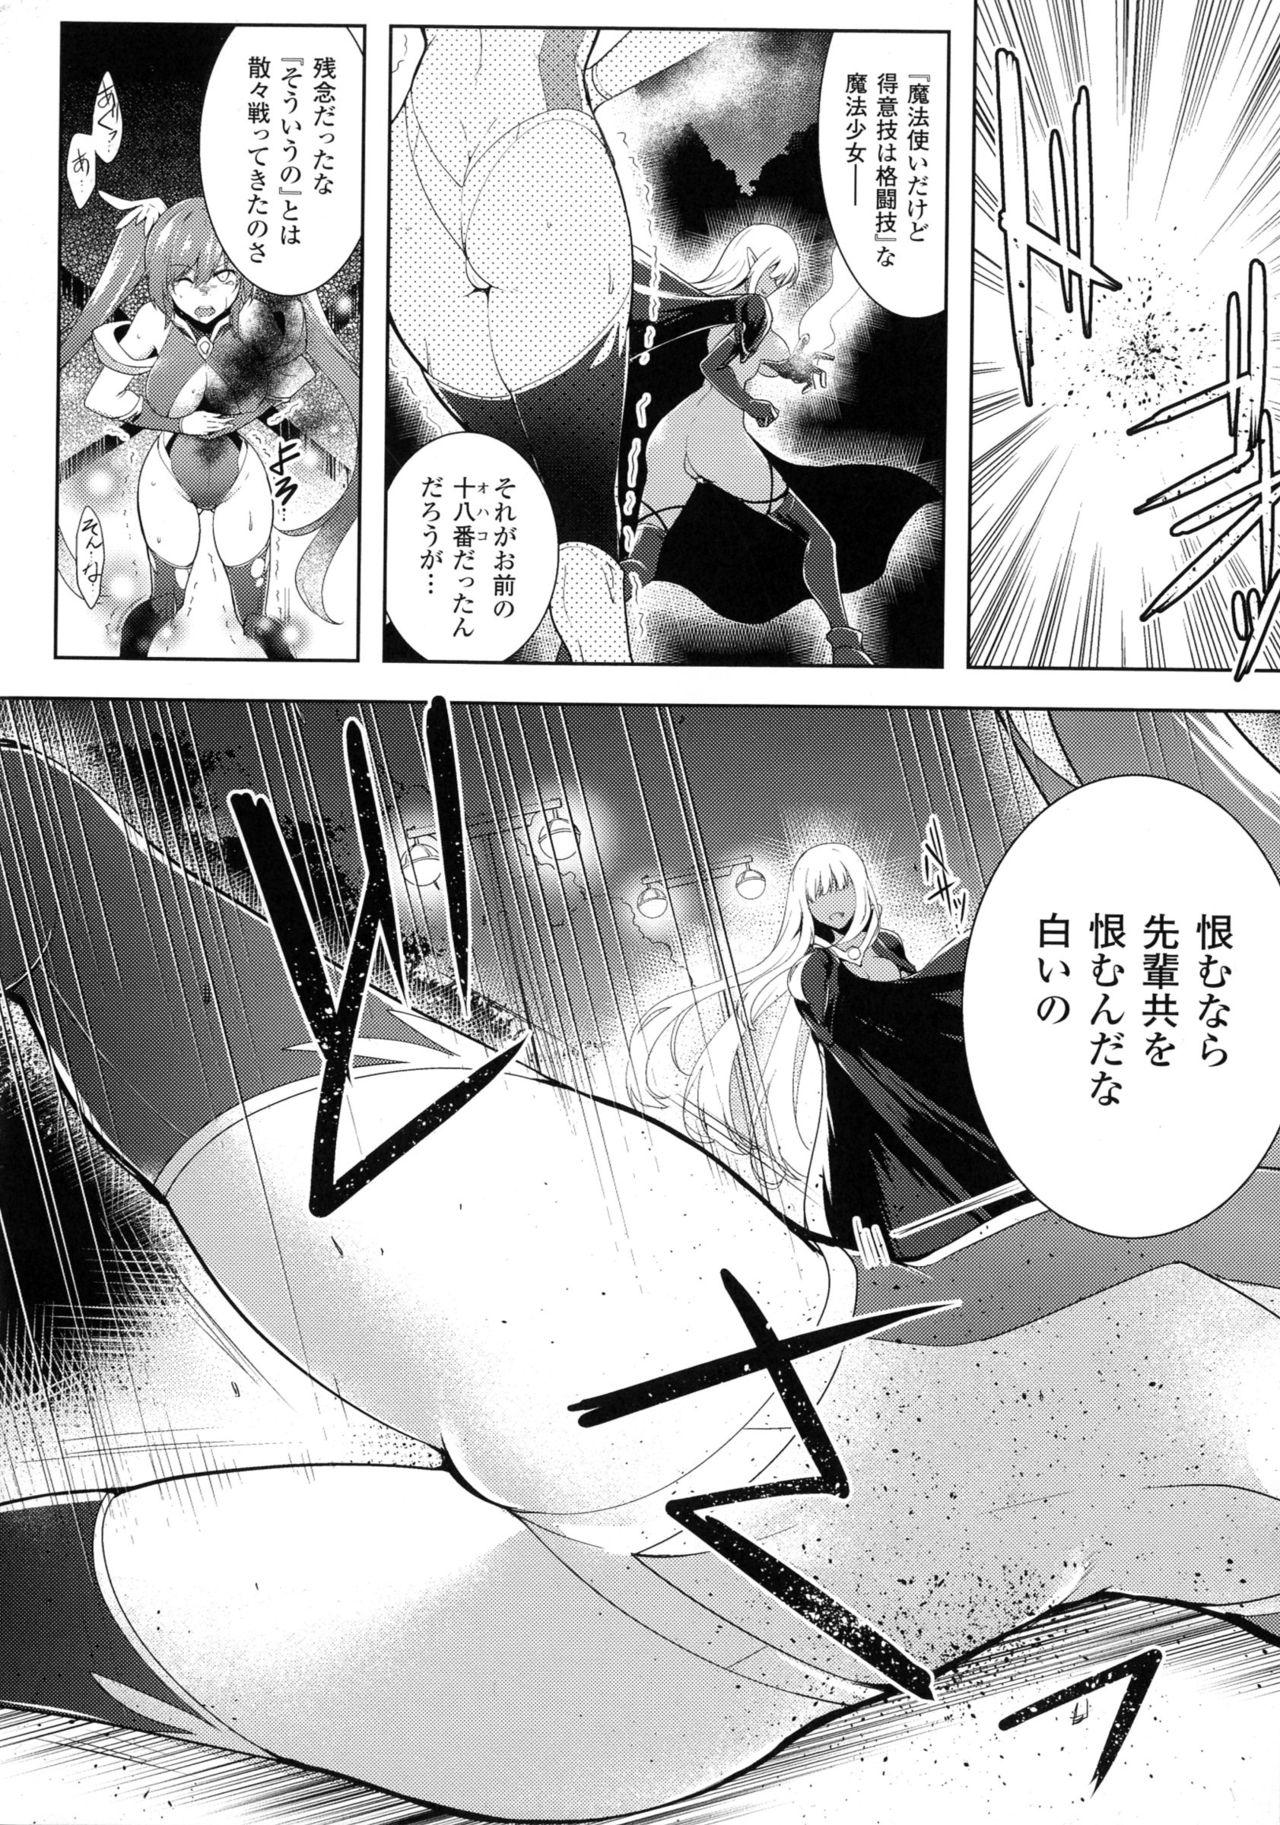 Seigi no Heroine Kangoku File DX Vol. 3 31